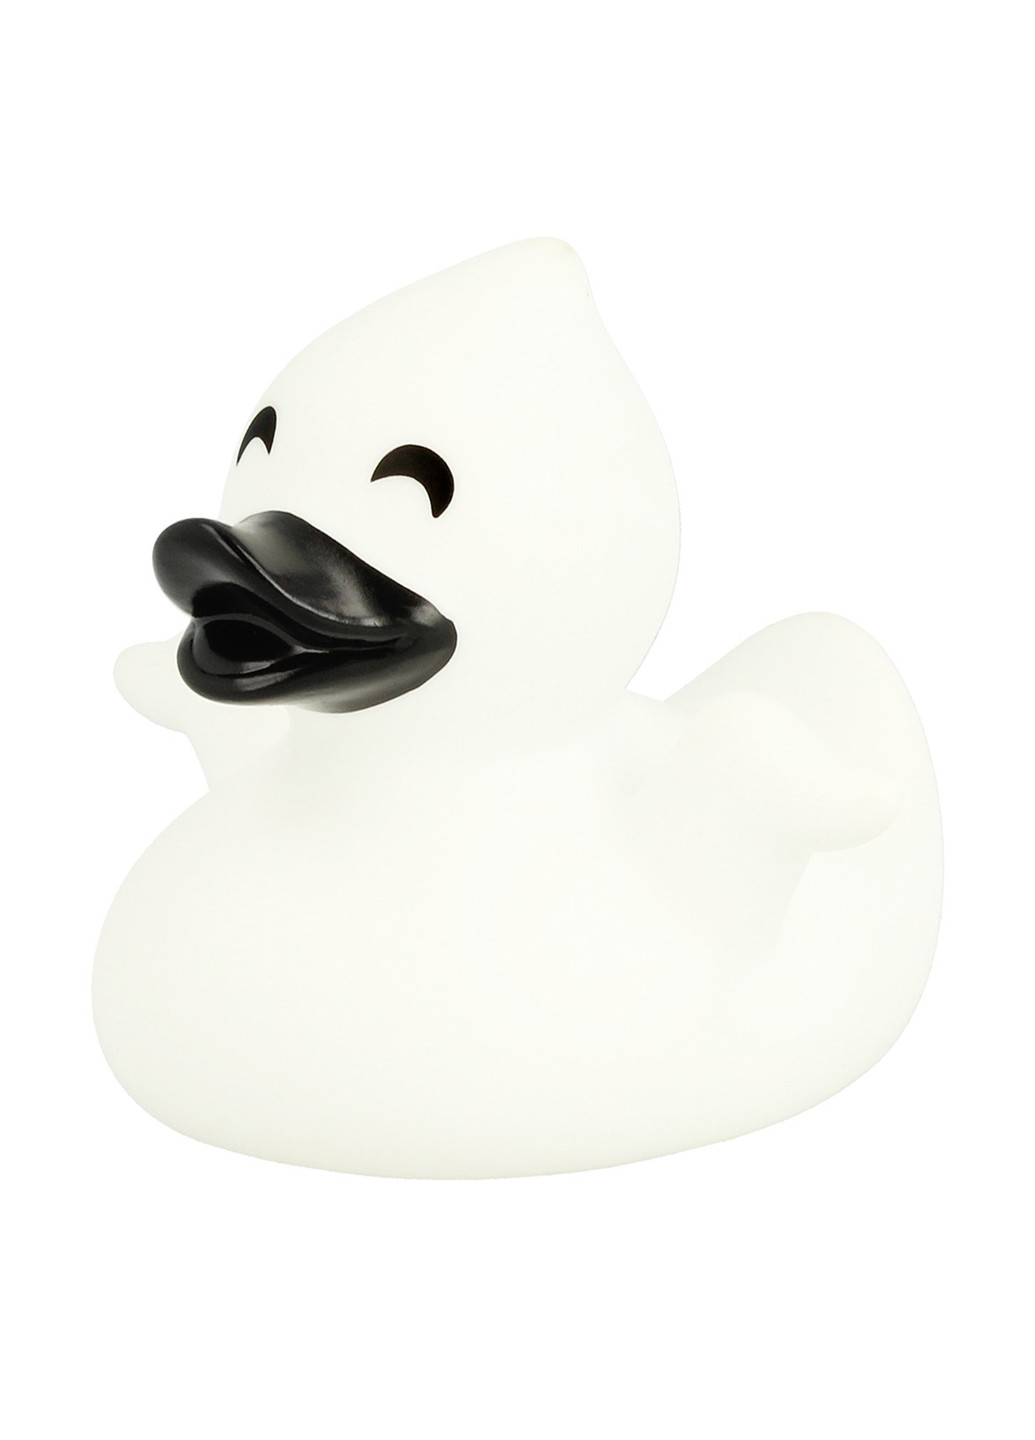 Игрушка для купания Утка Призрак, 8,5x8,5x7,5 см Funny Ducks (250618795)